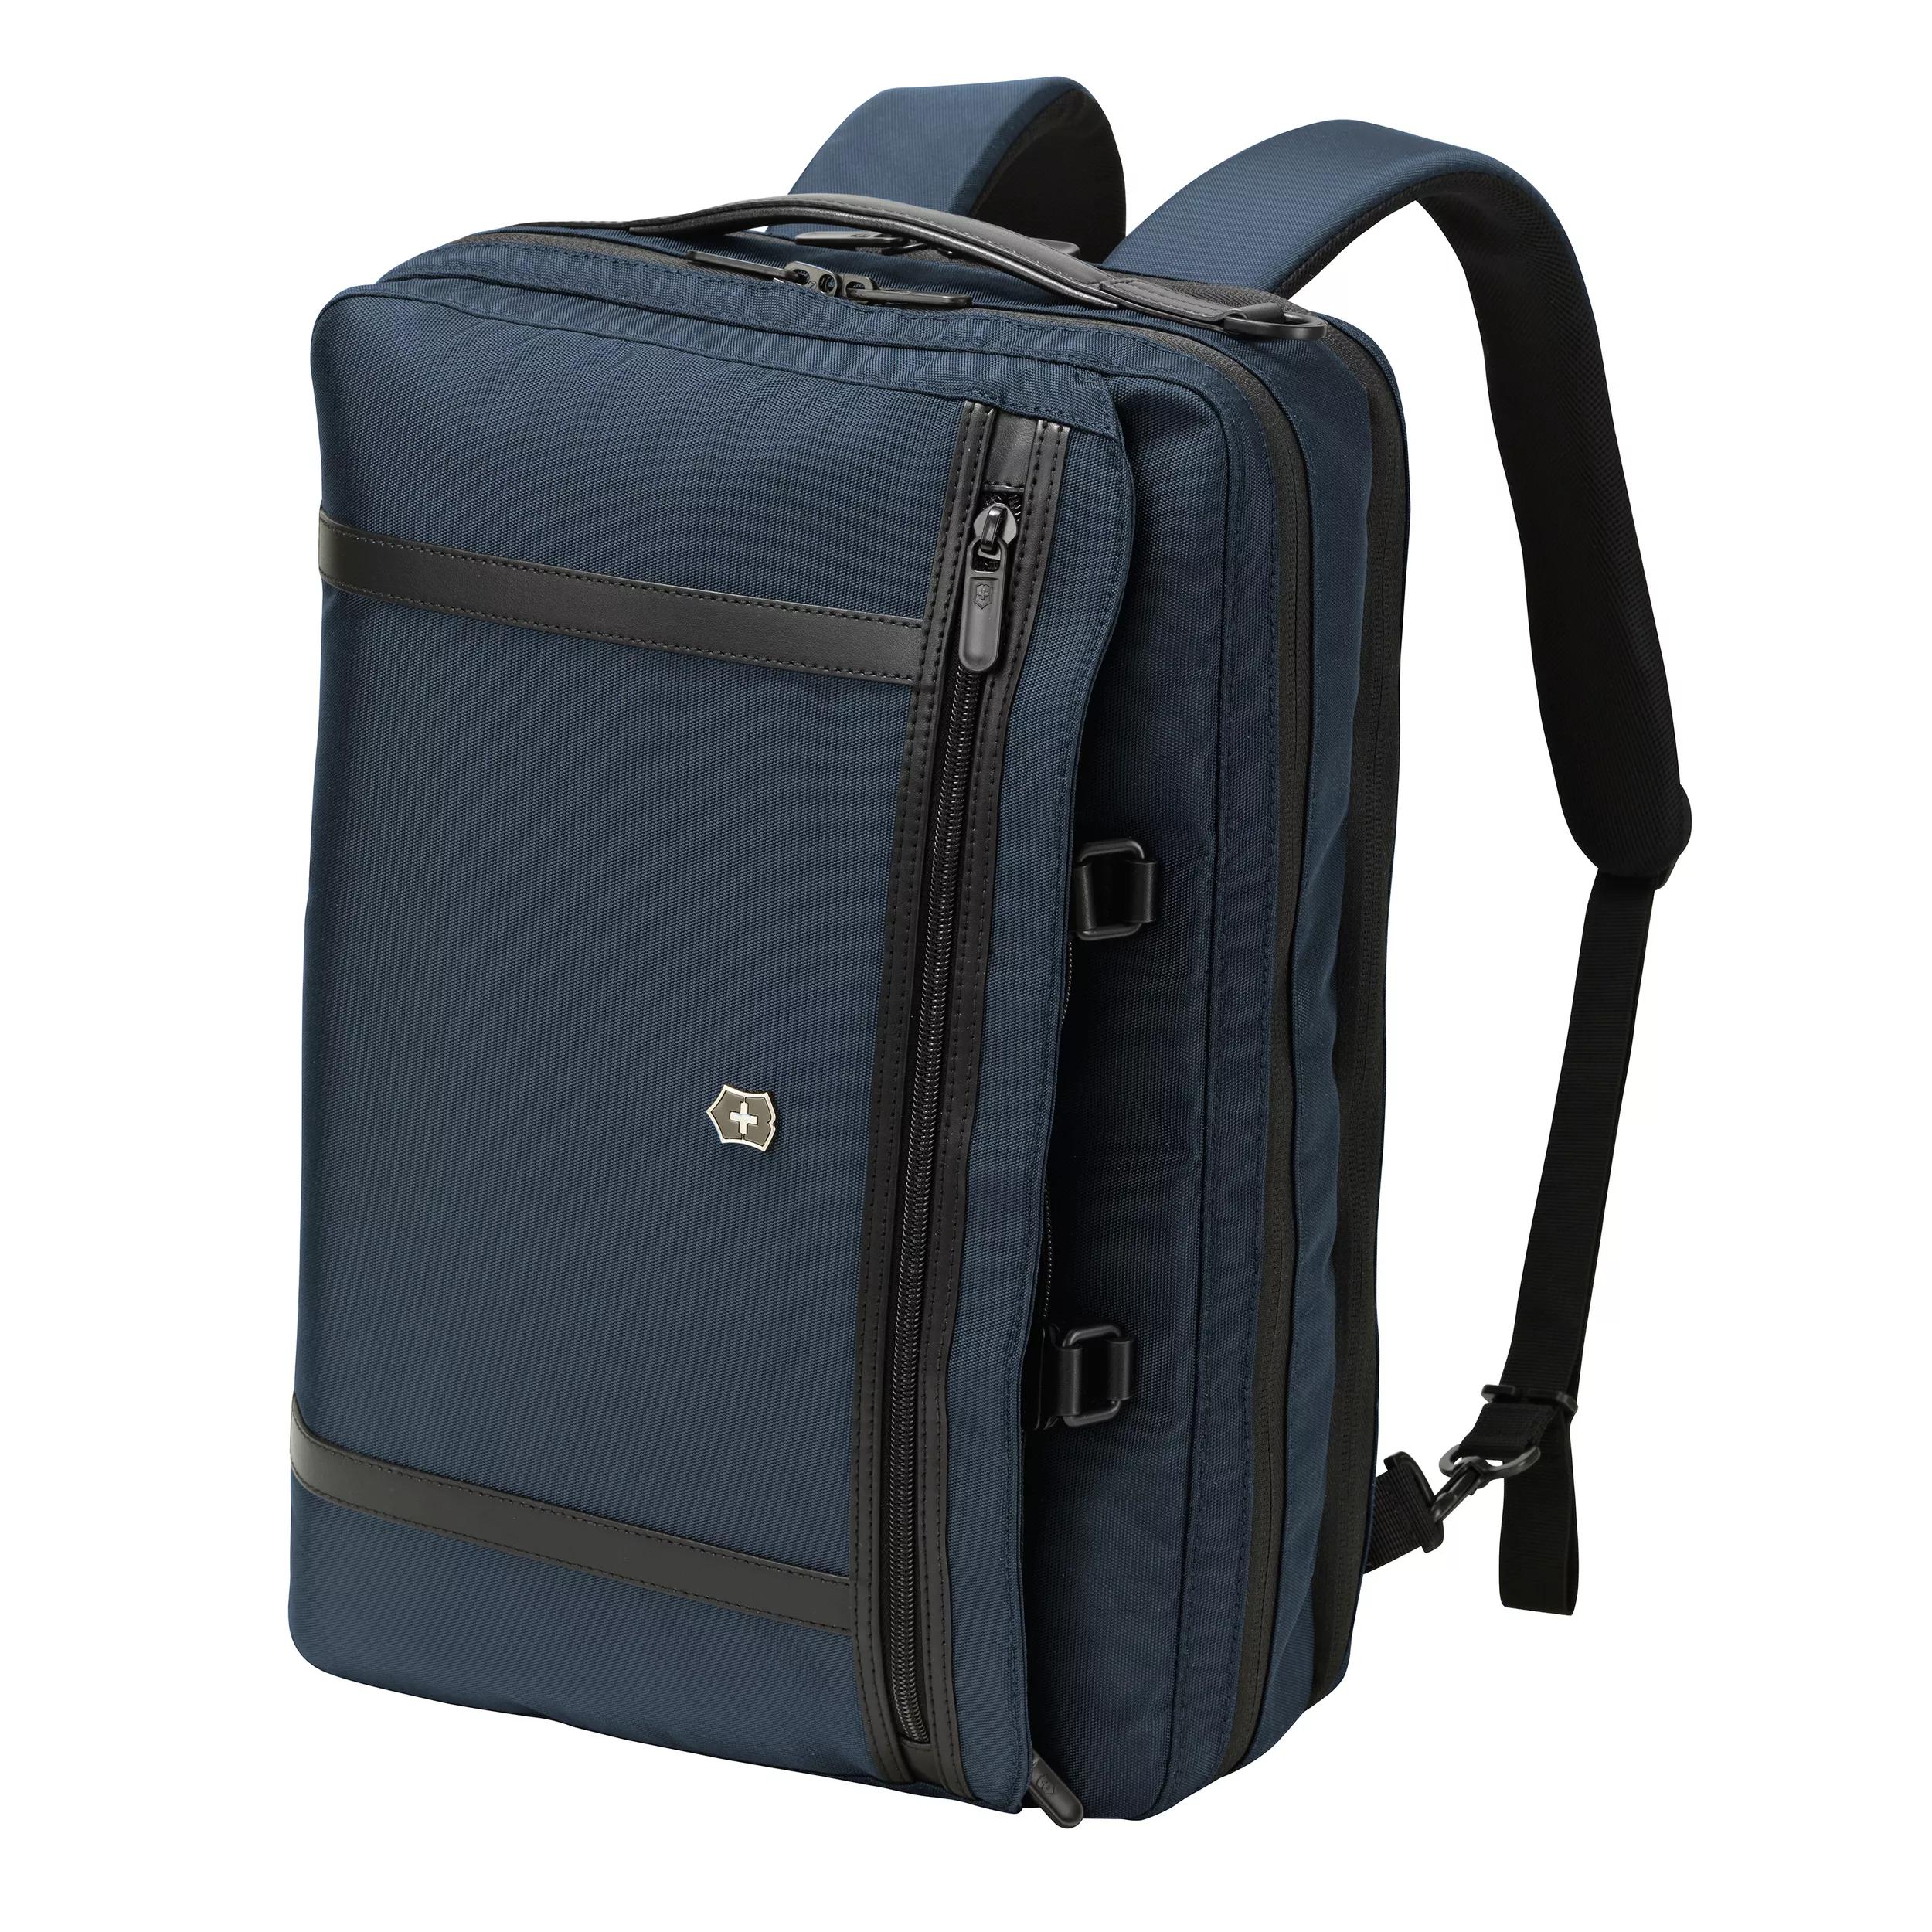 Werks Professional 2.0 2-Way Carry Laptop Bag